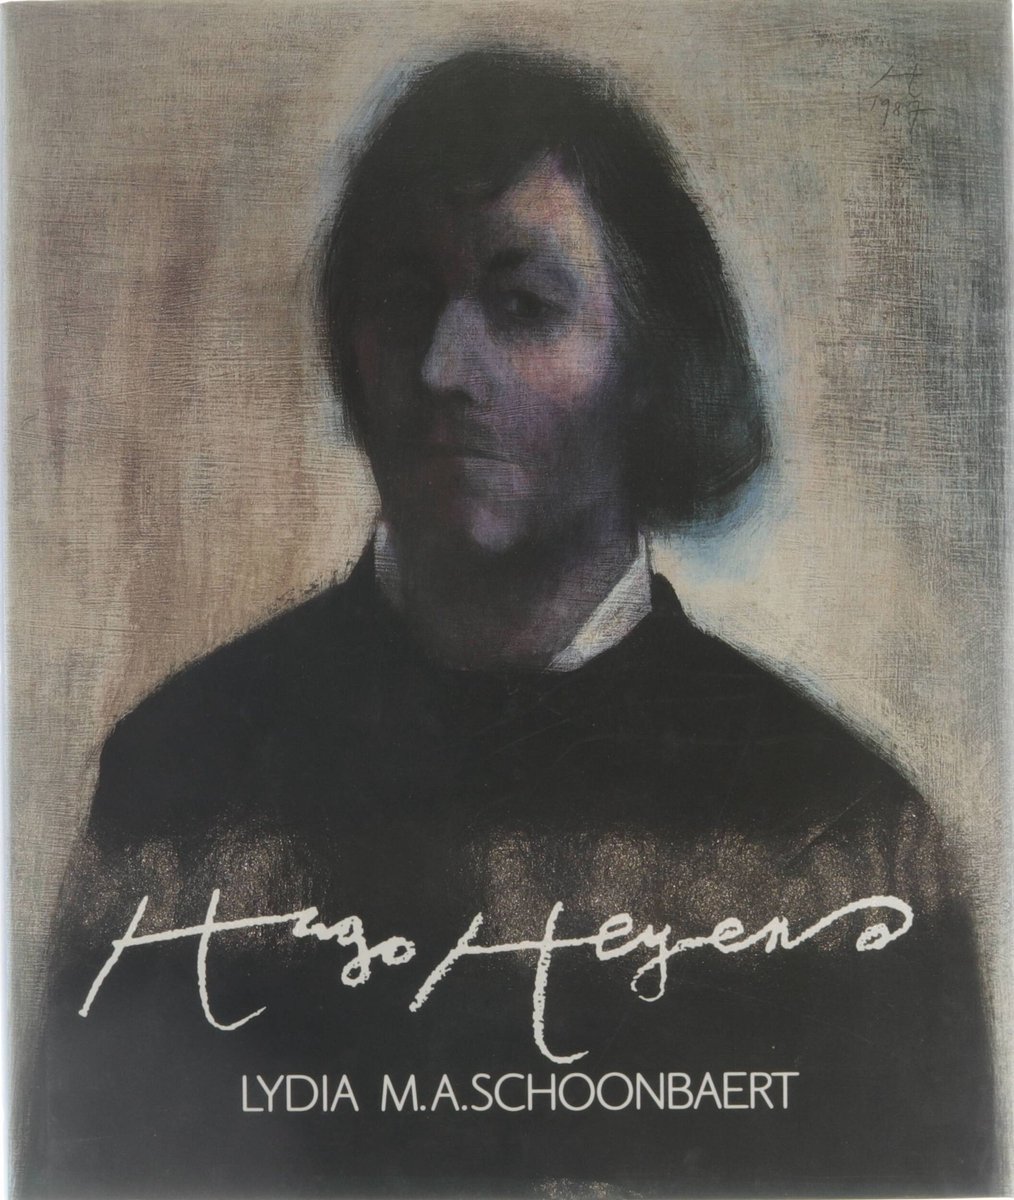 Hugo Heyens